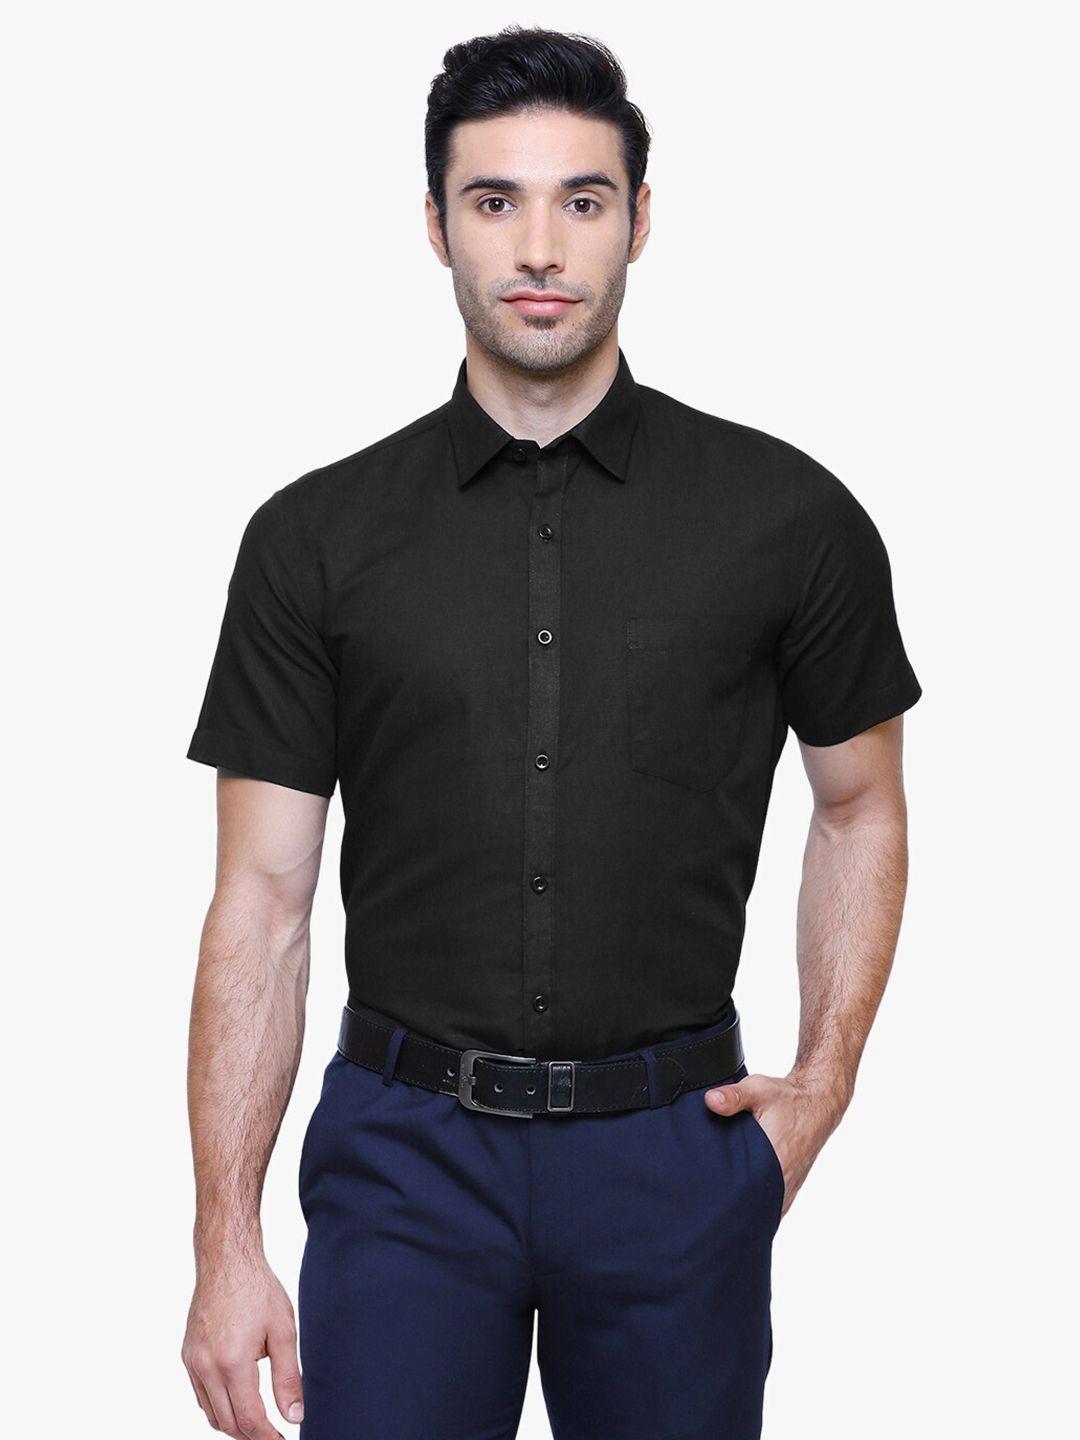 southbay-men-black-smart-tailored-fit-formal-shirt